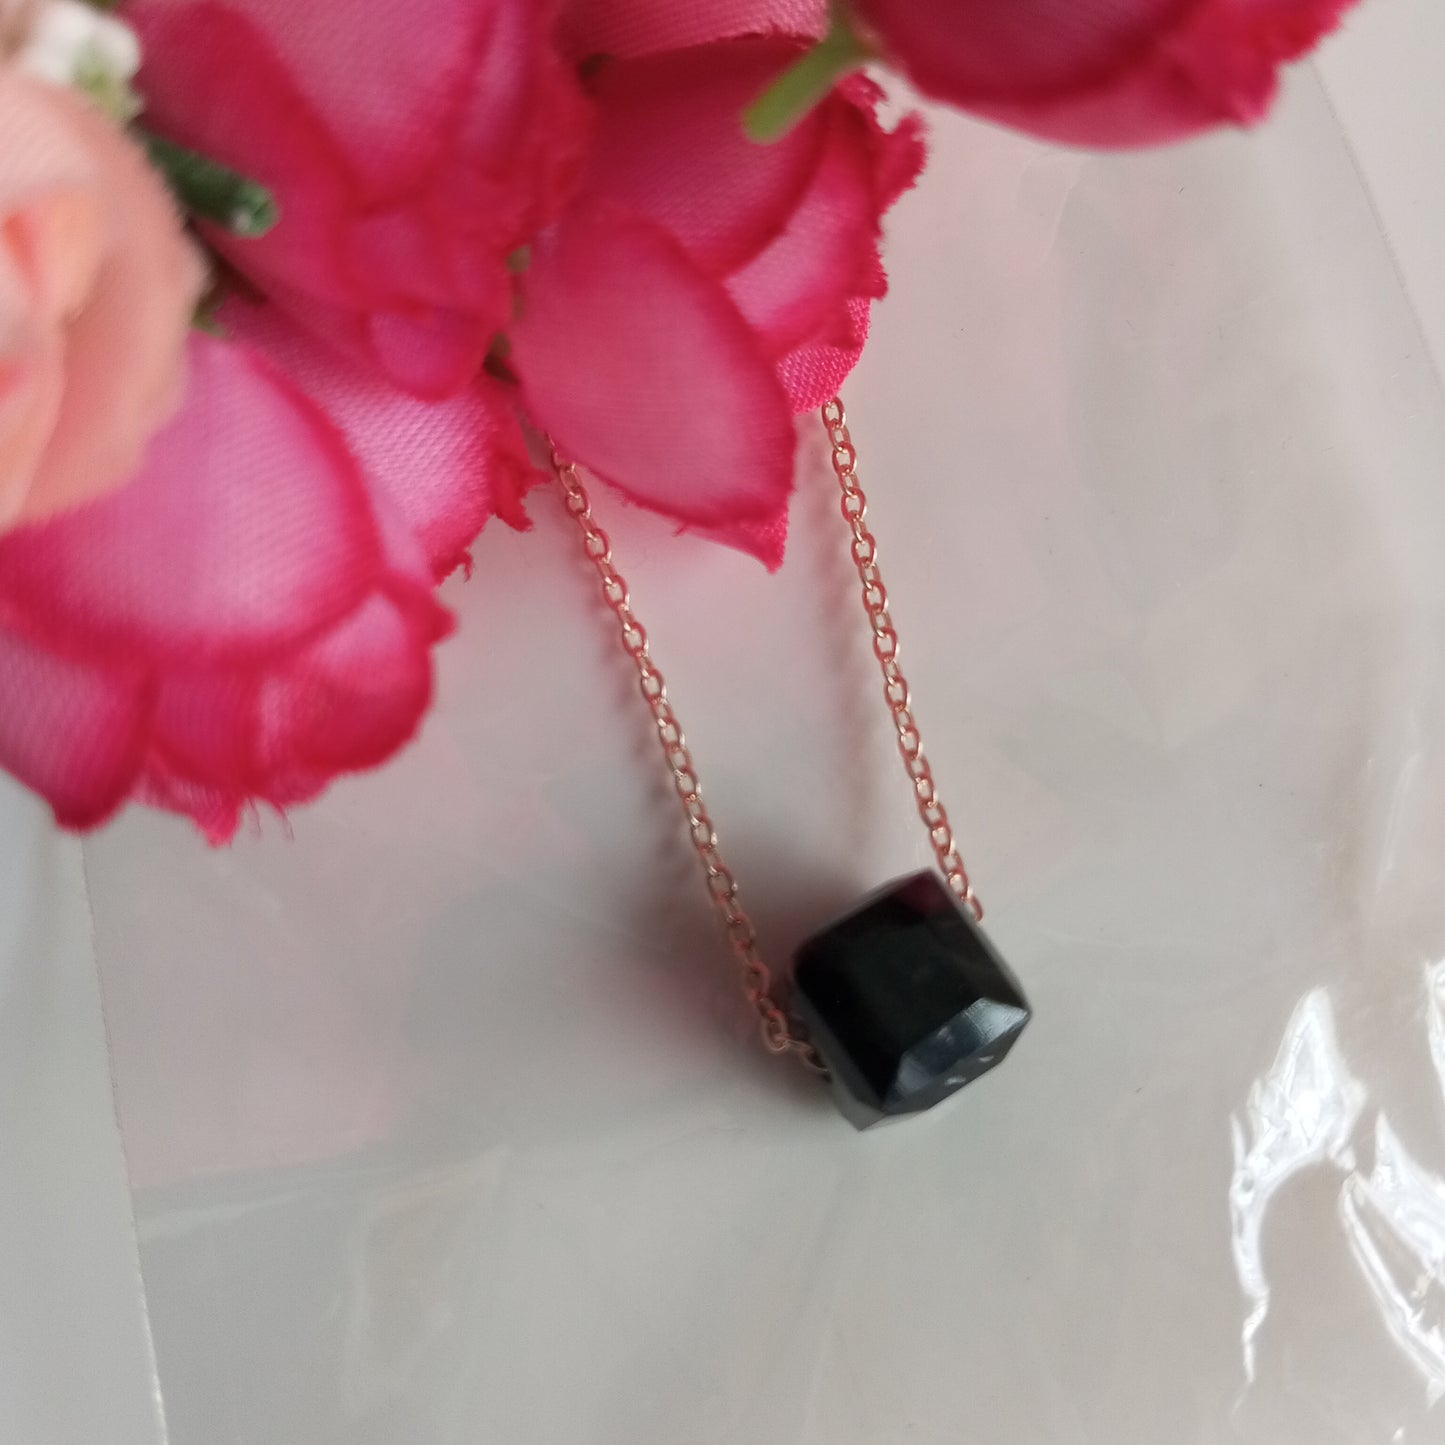 Chain with Pendant- Black Stone